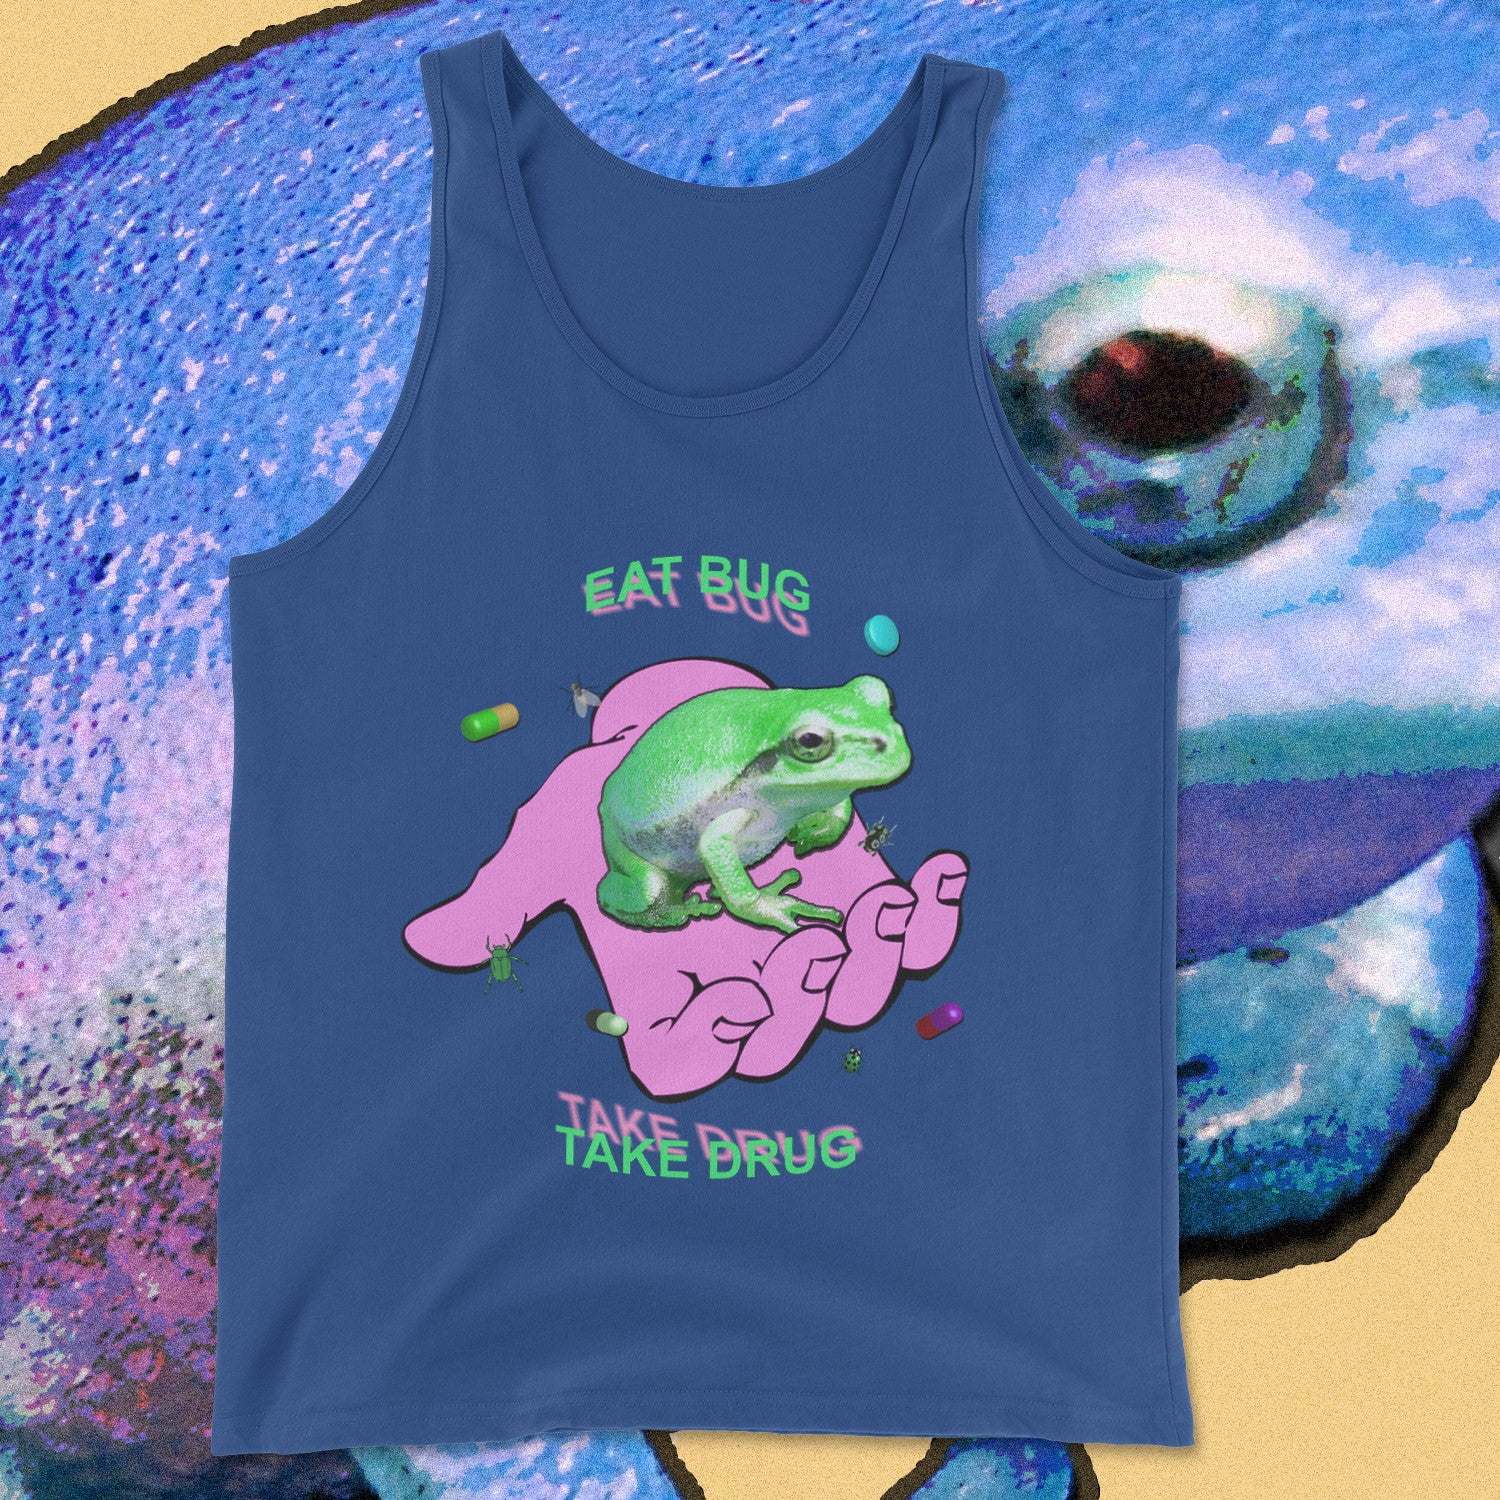 eat bug take drug